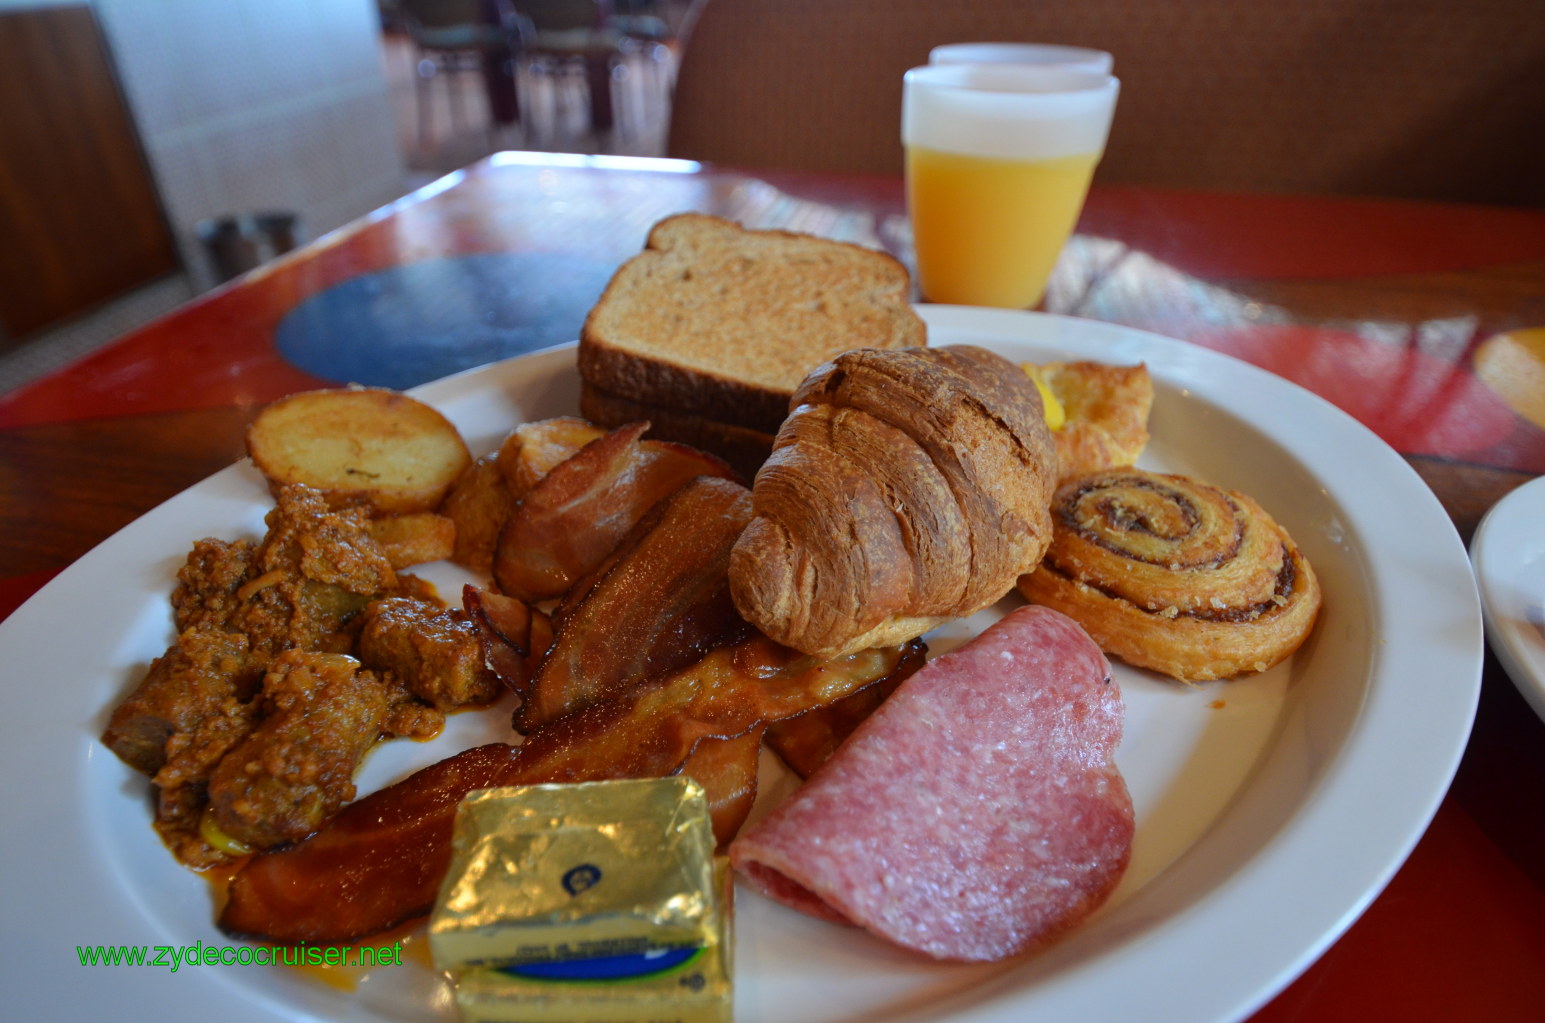 022: Carnival Conquest, Nov 18. 2011, Cozumel, Lido Breakfast, Bacon, Sausage, Toast, Croissant, Potatoes